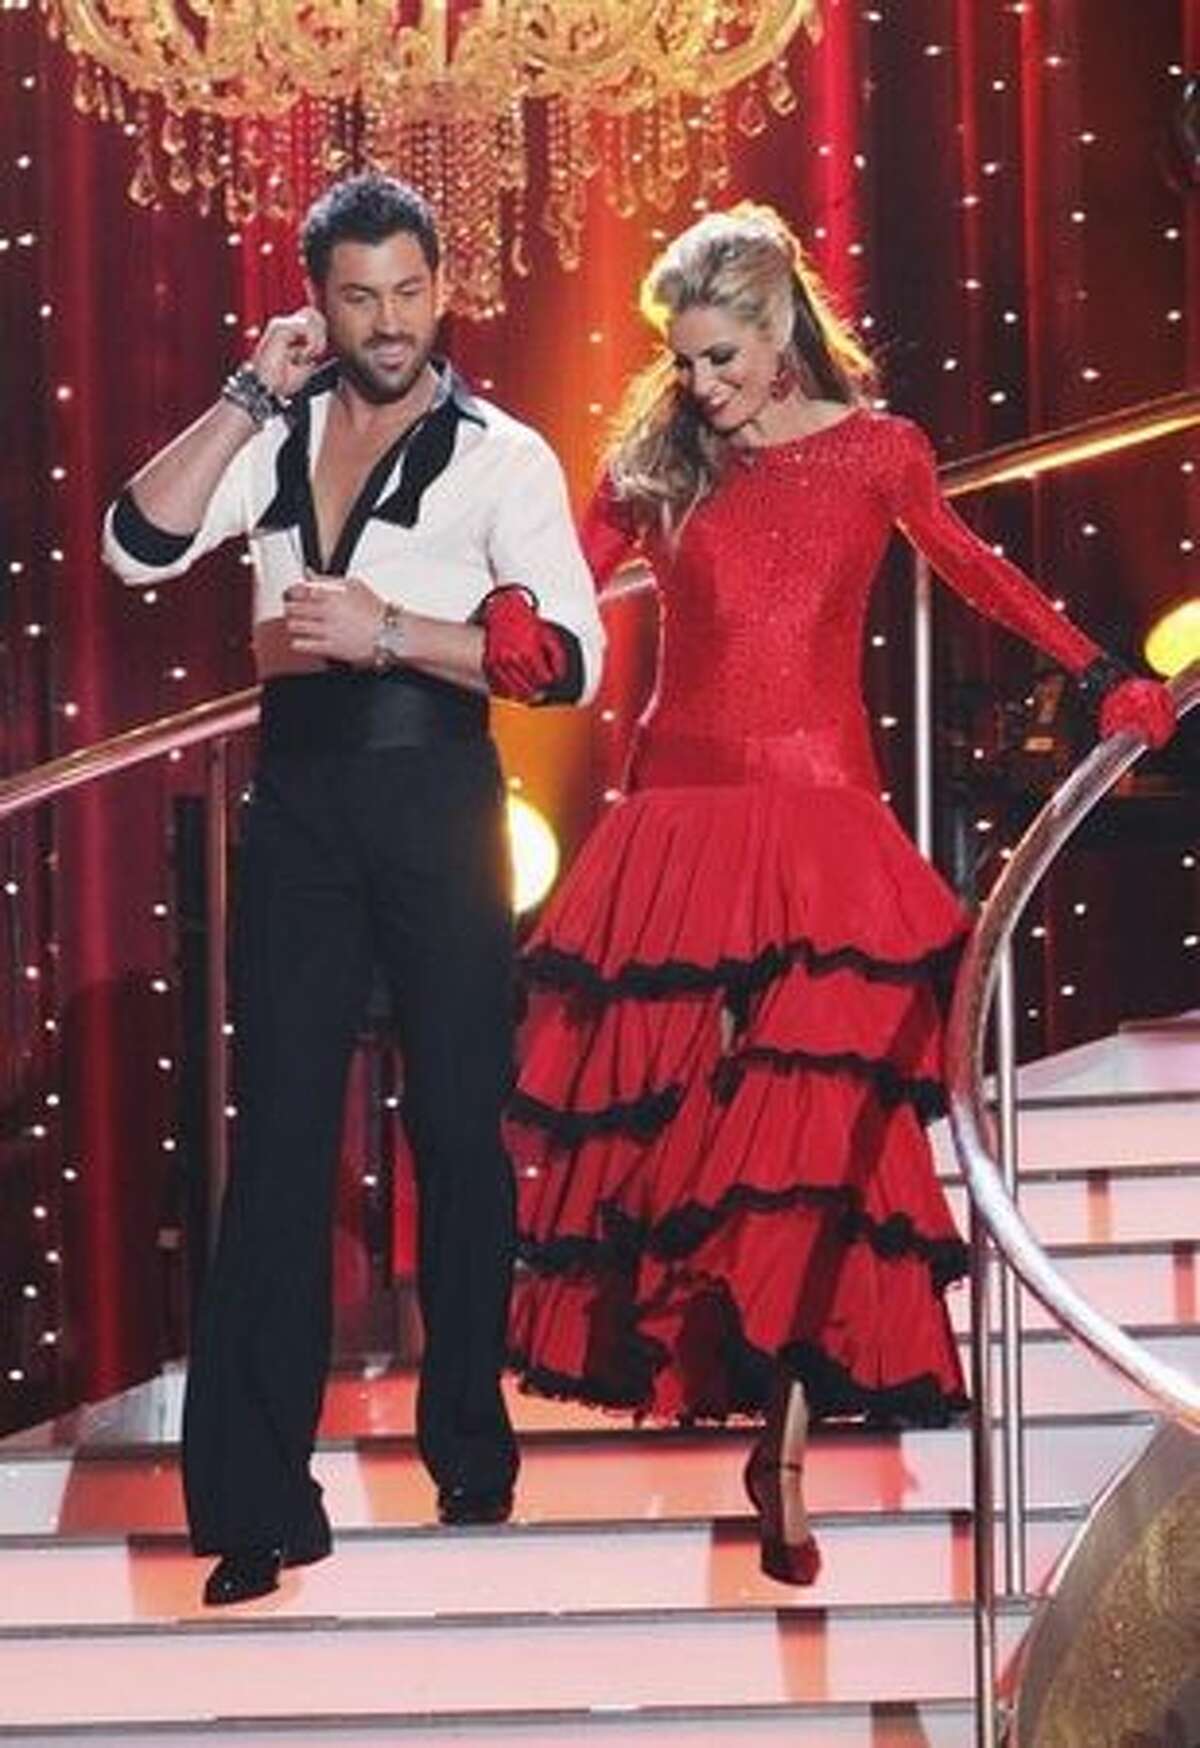 Sportscaster Erin Andrews and her partner, professional dancer Maksim Chmerkovskiy.